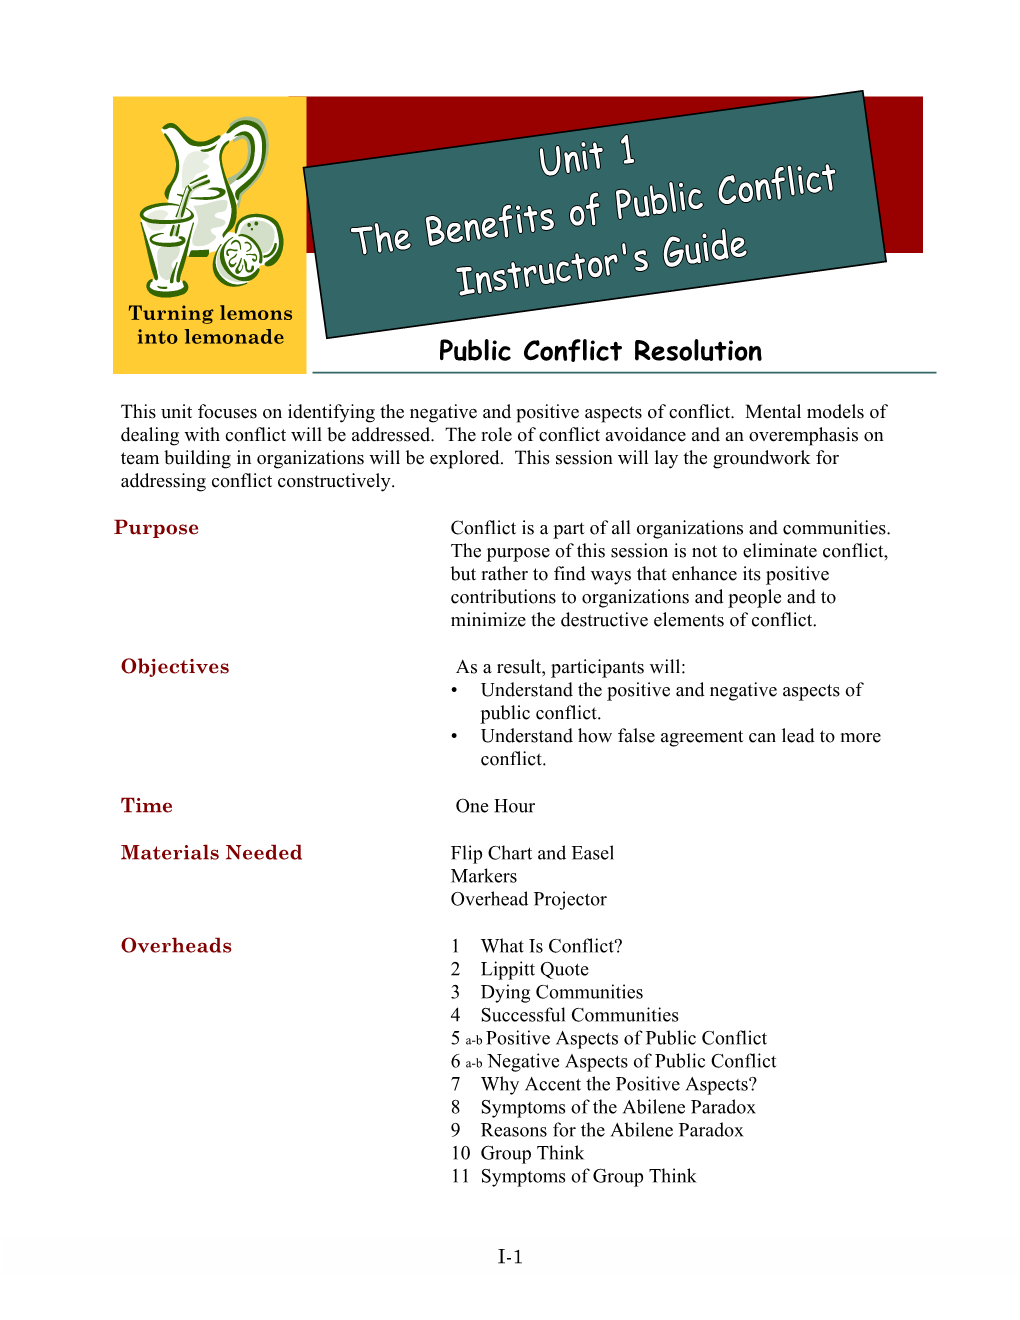 Public Conflict Resolution